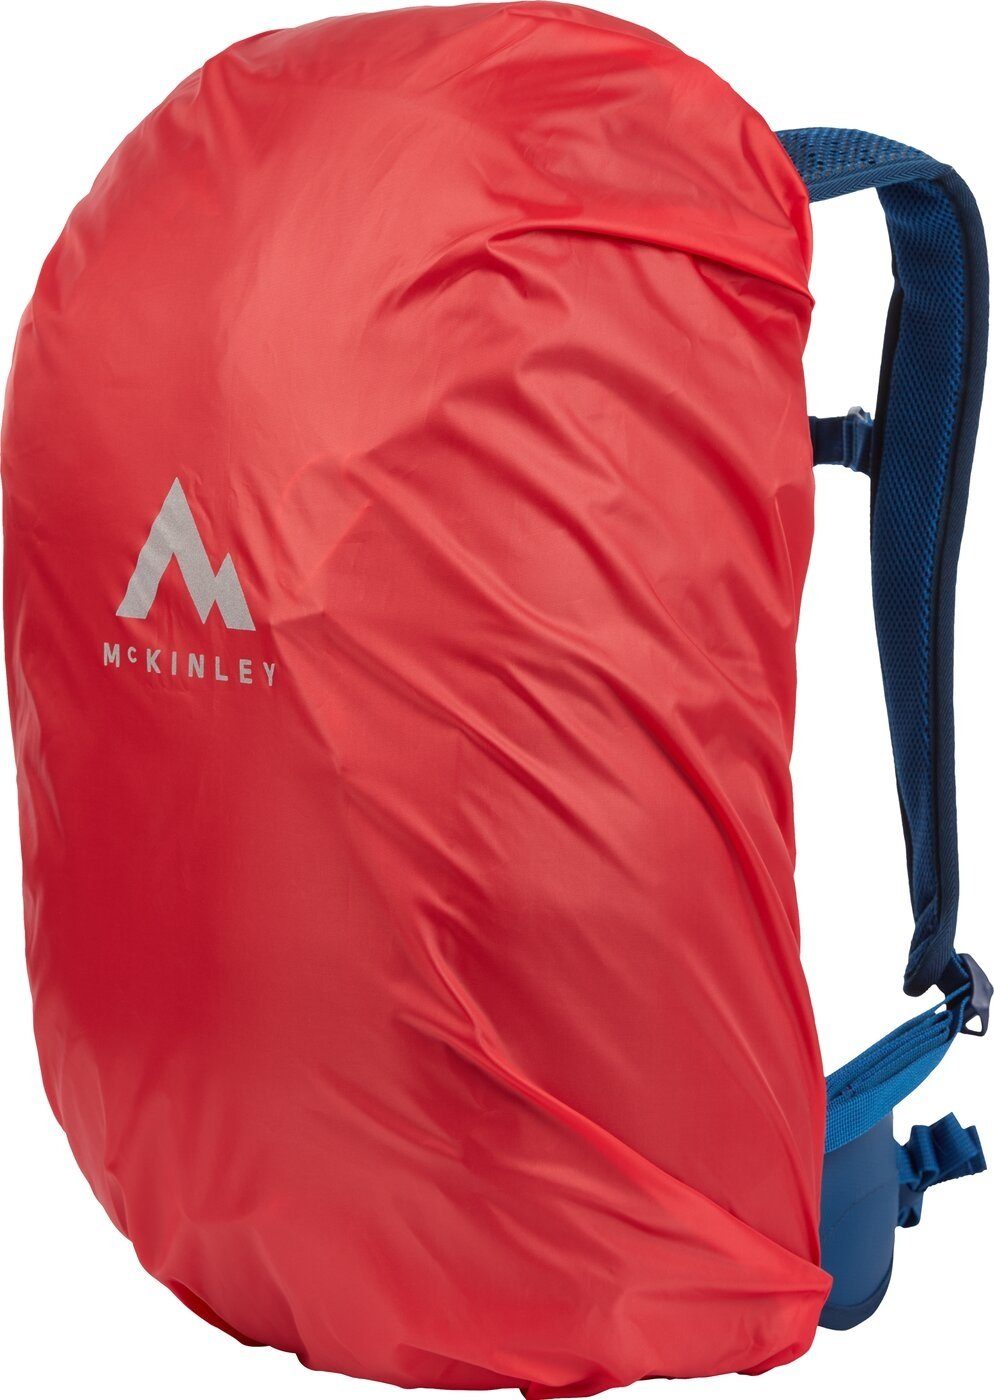 McKINLEY Trekkingrucksack 25 PETROL BLUE SKUA VT Wander-Rucksack